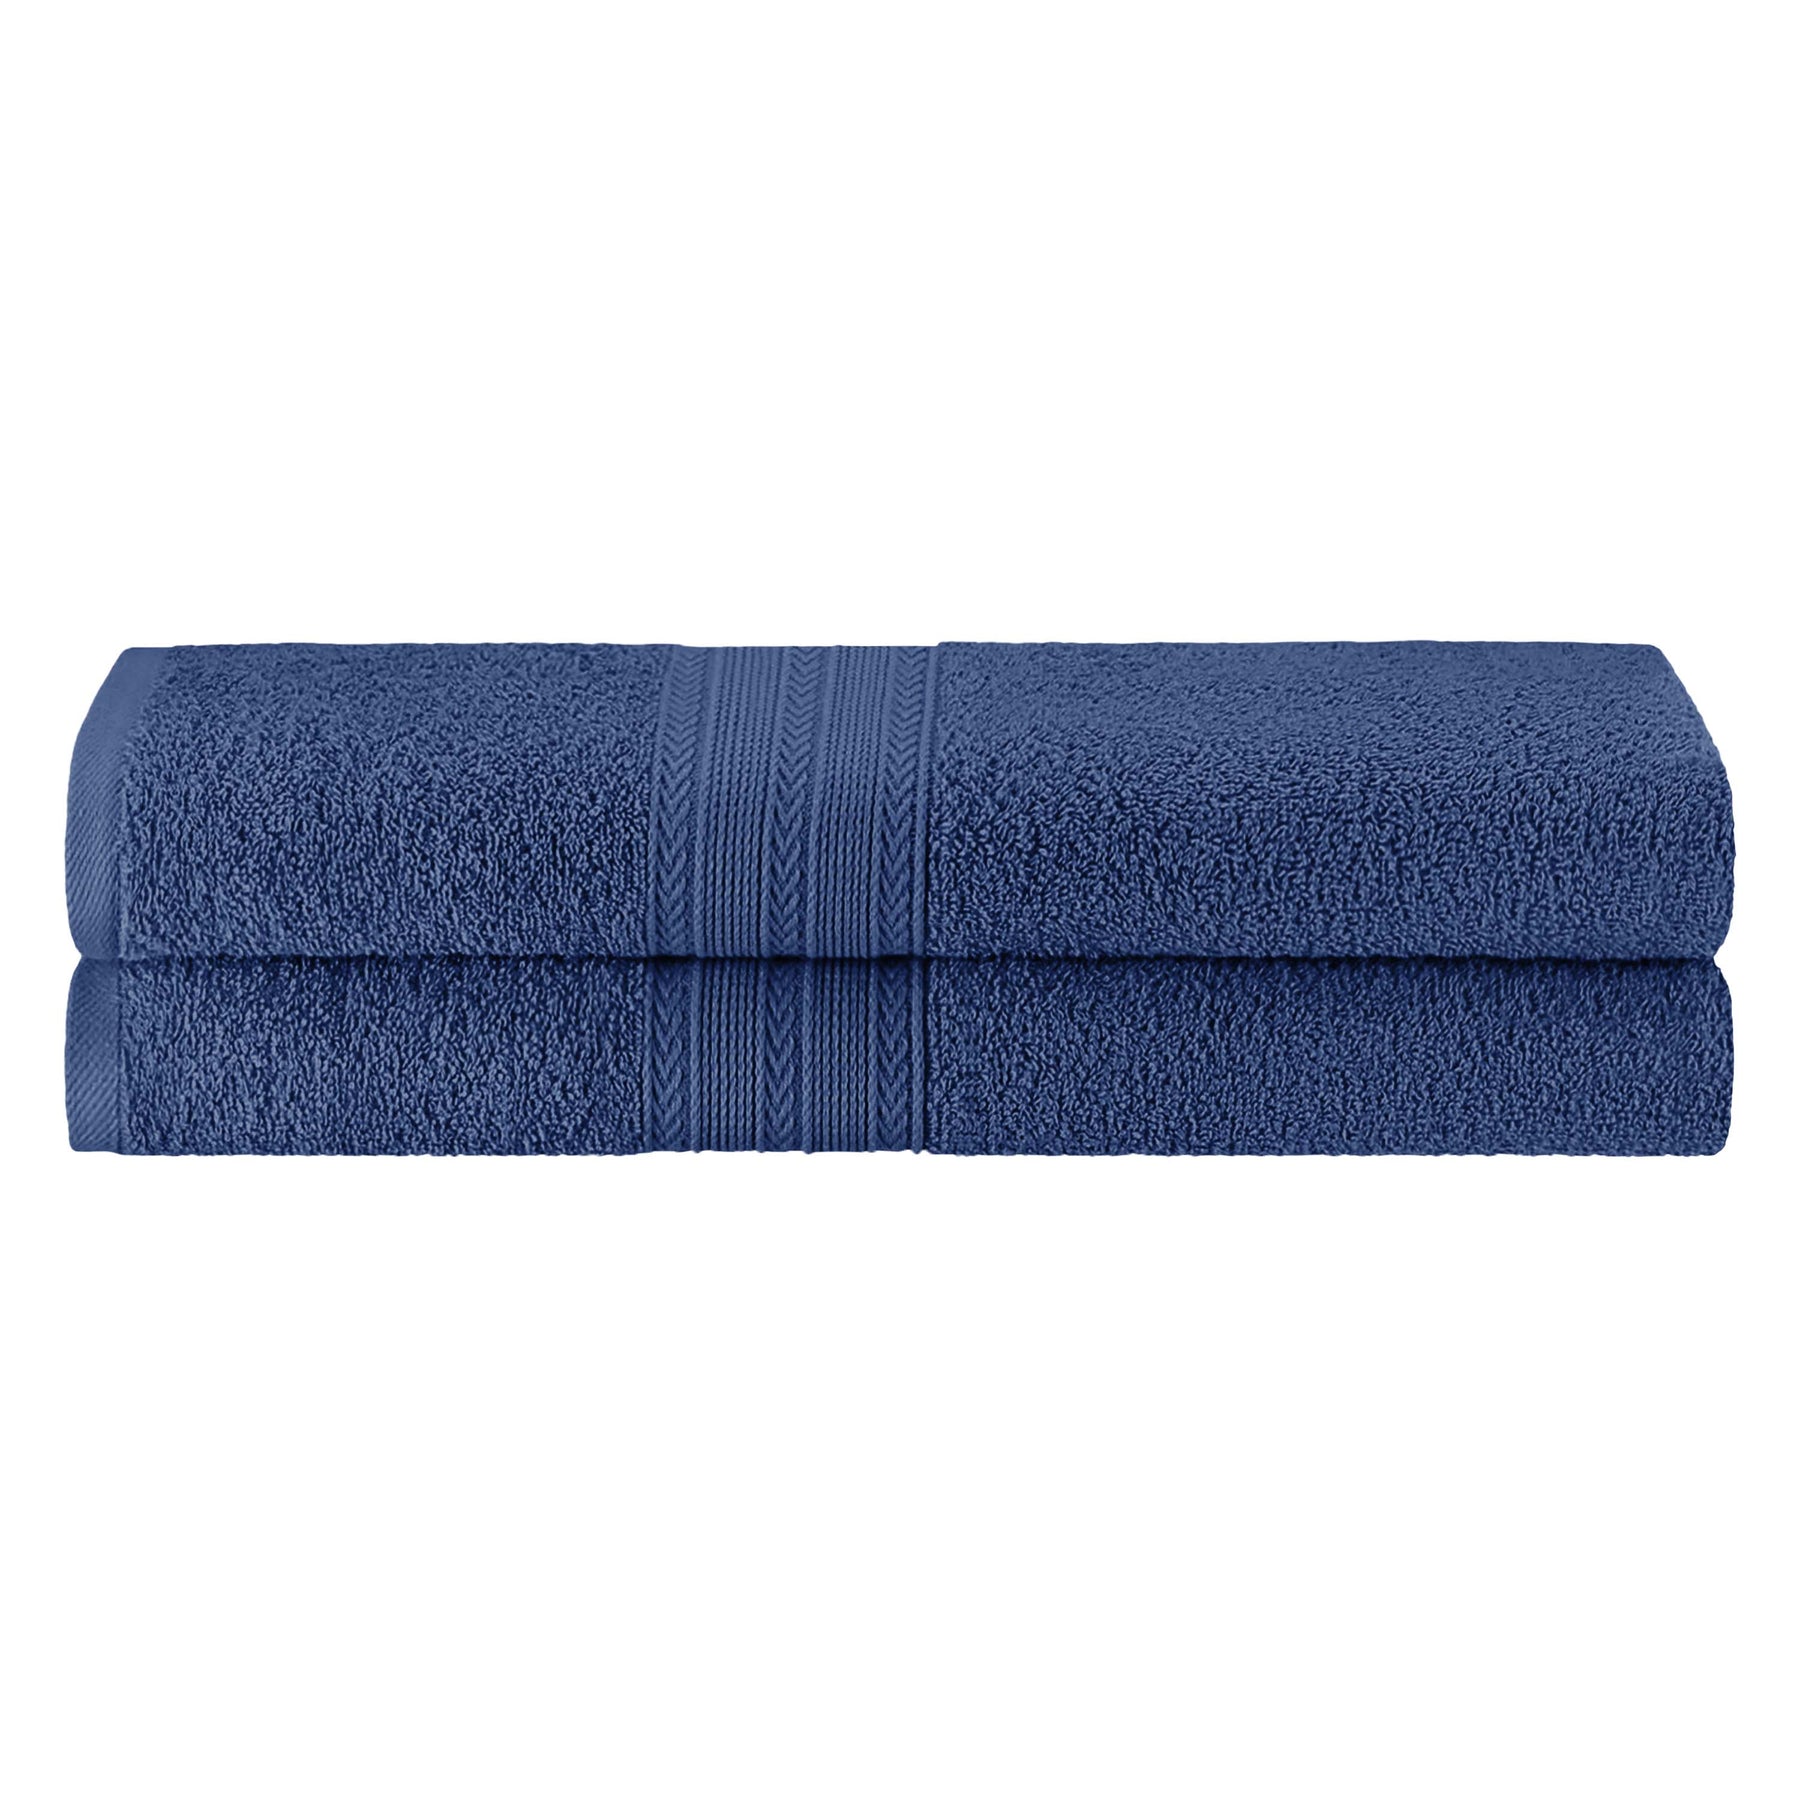 Eco-Friendly Ring Spun Cotton Towel Set - Navy Blue